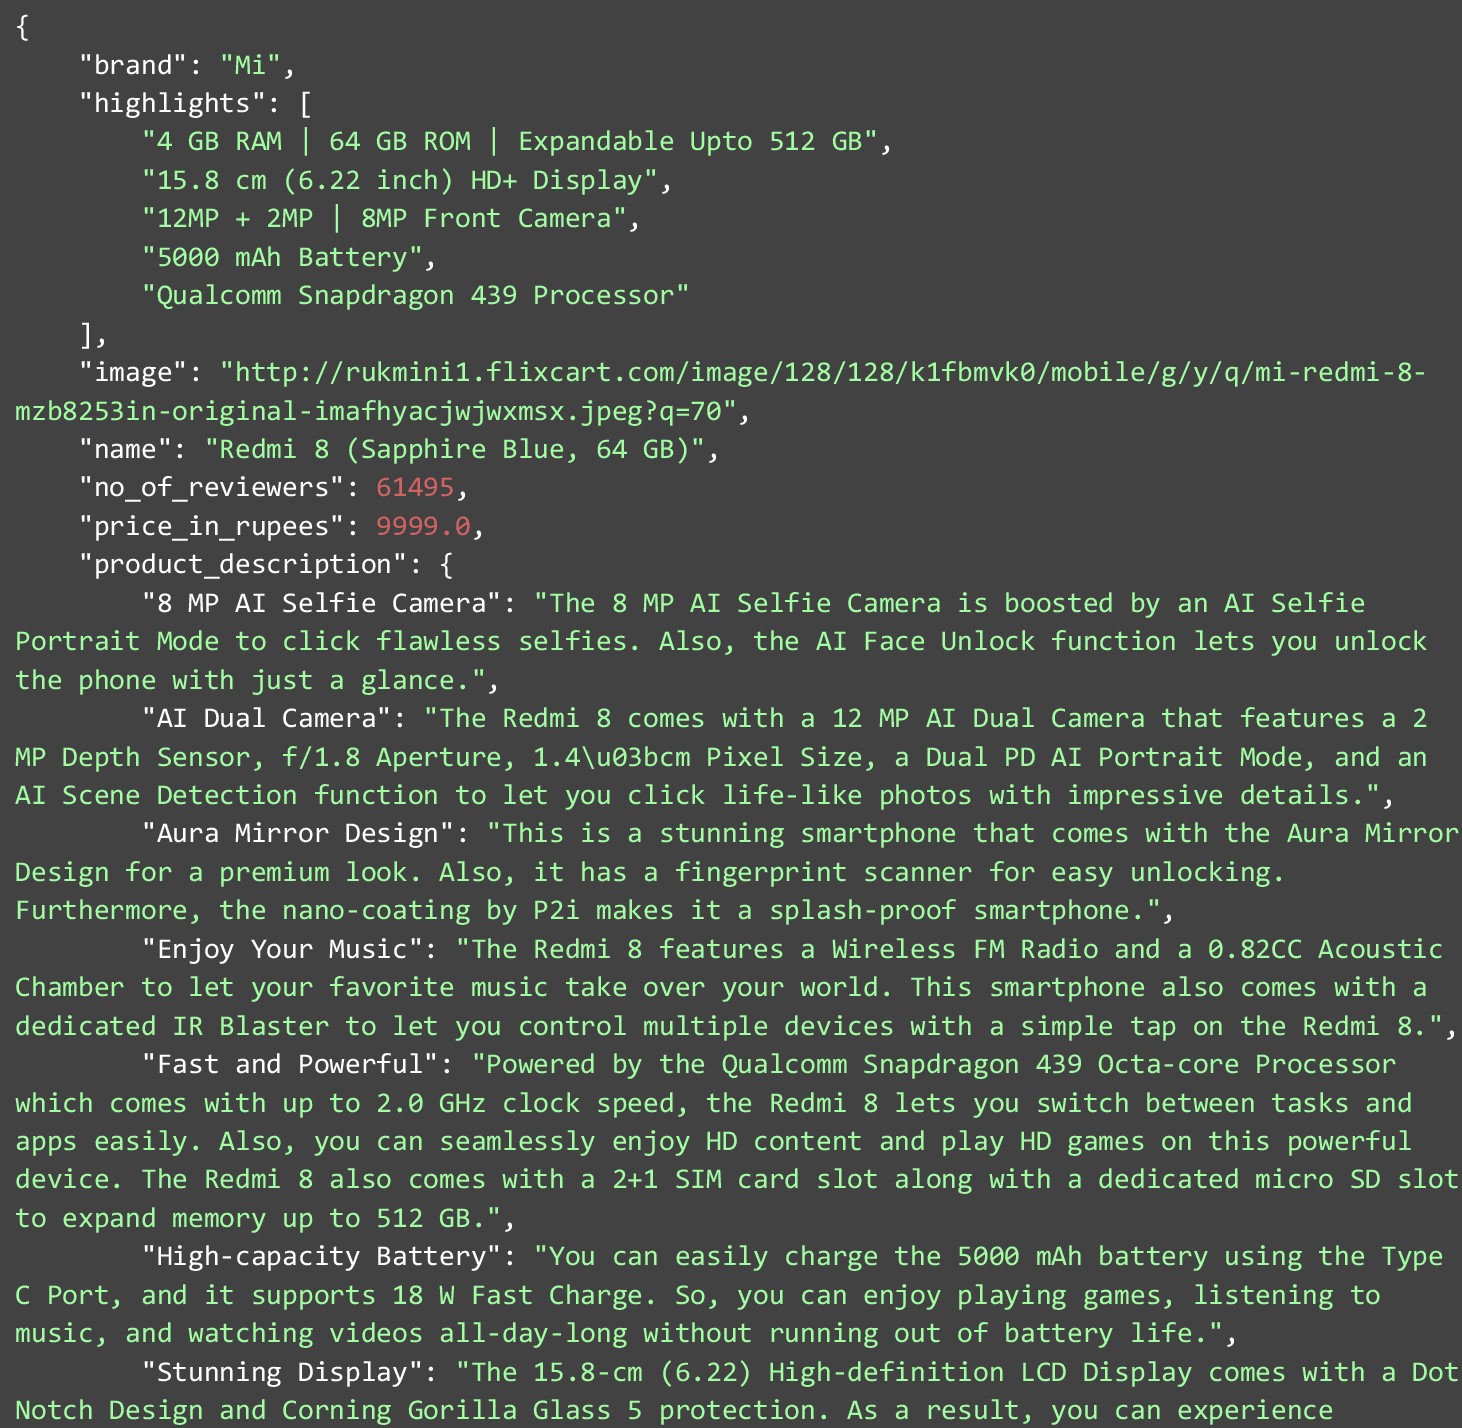 The code for extracting data from Flipkart
